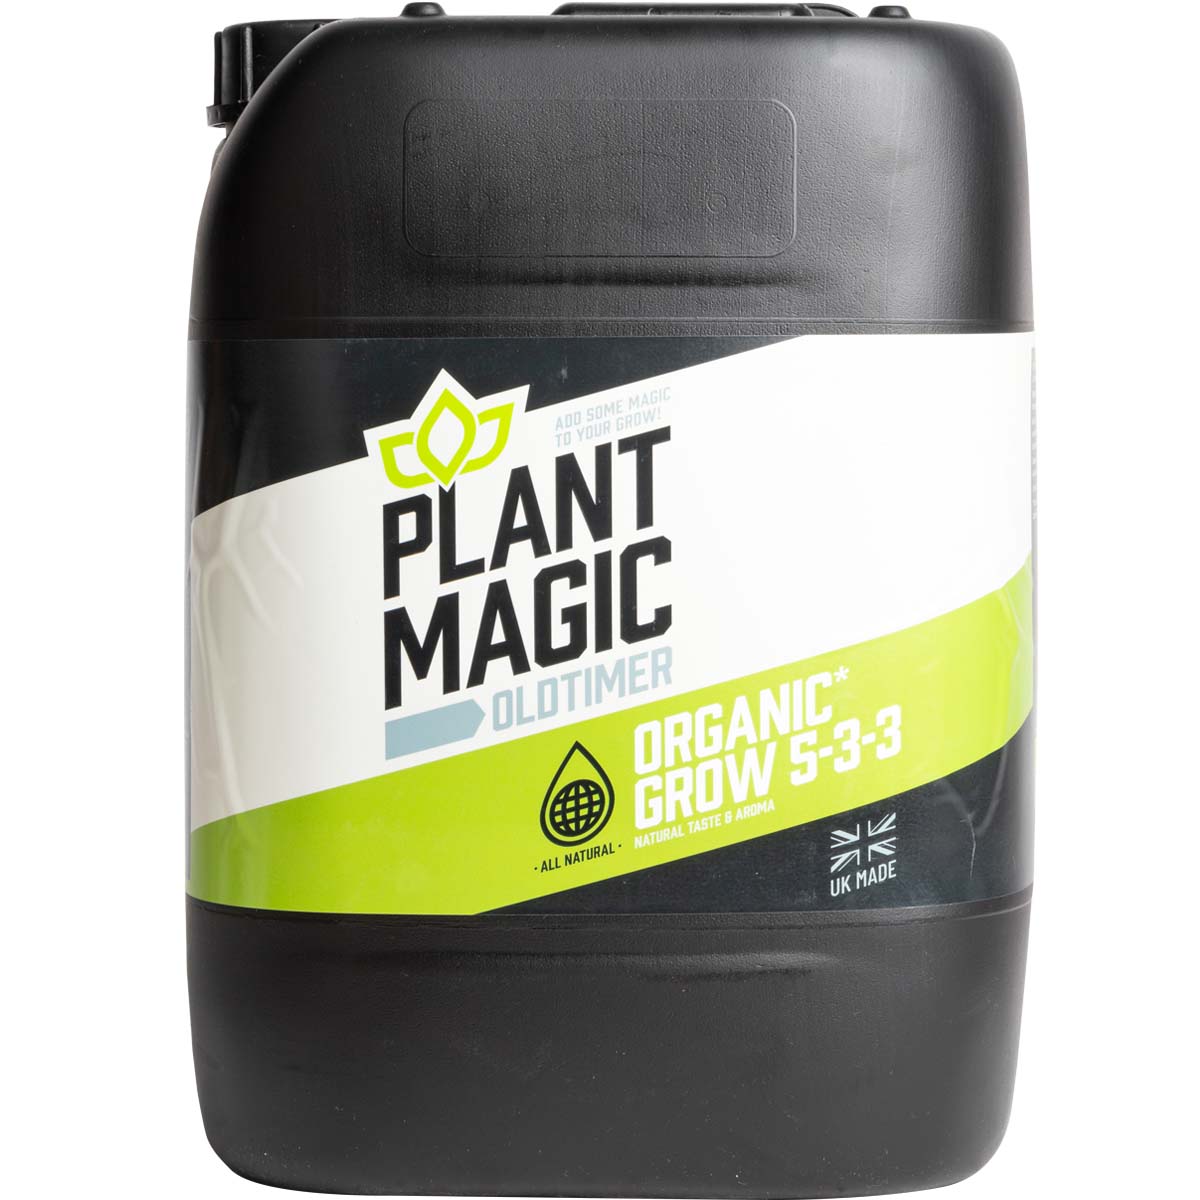 Plant Magic - Oldtimer Organic Grow